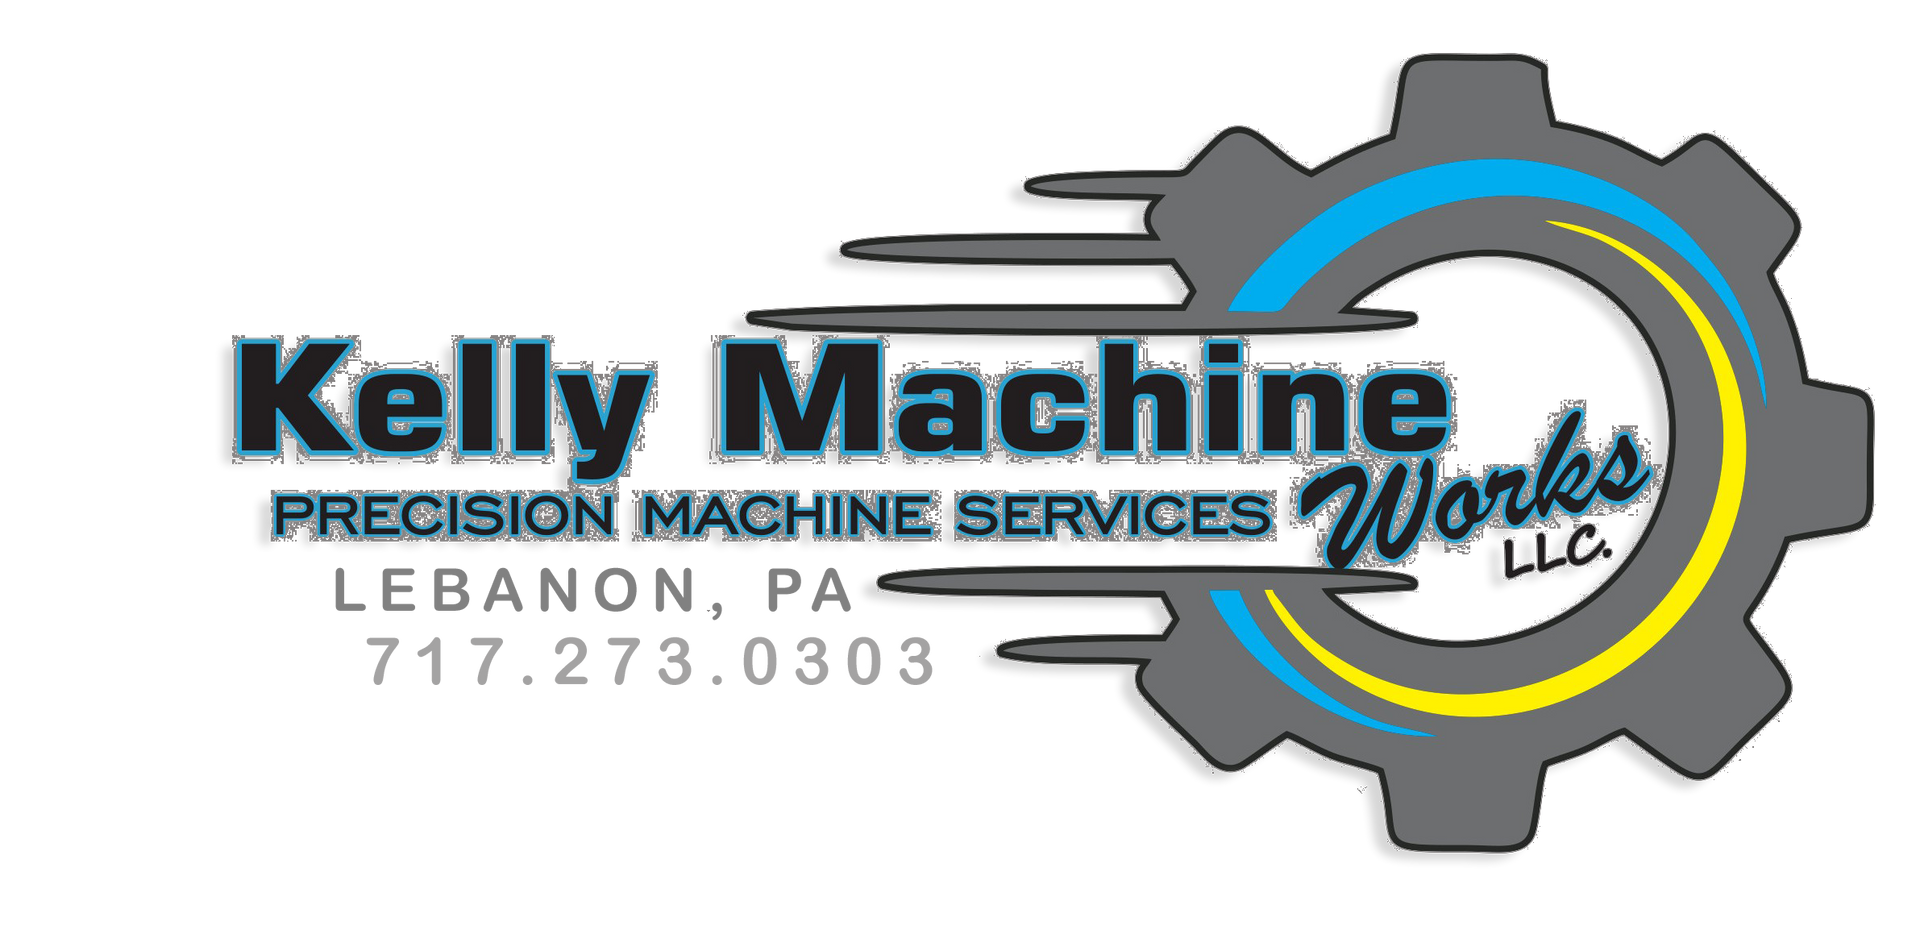 Kelly Machine Works | Precision Machine Service